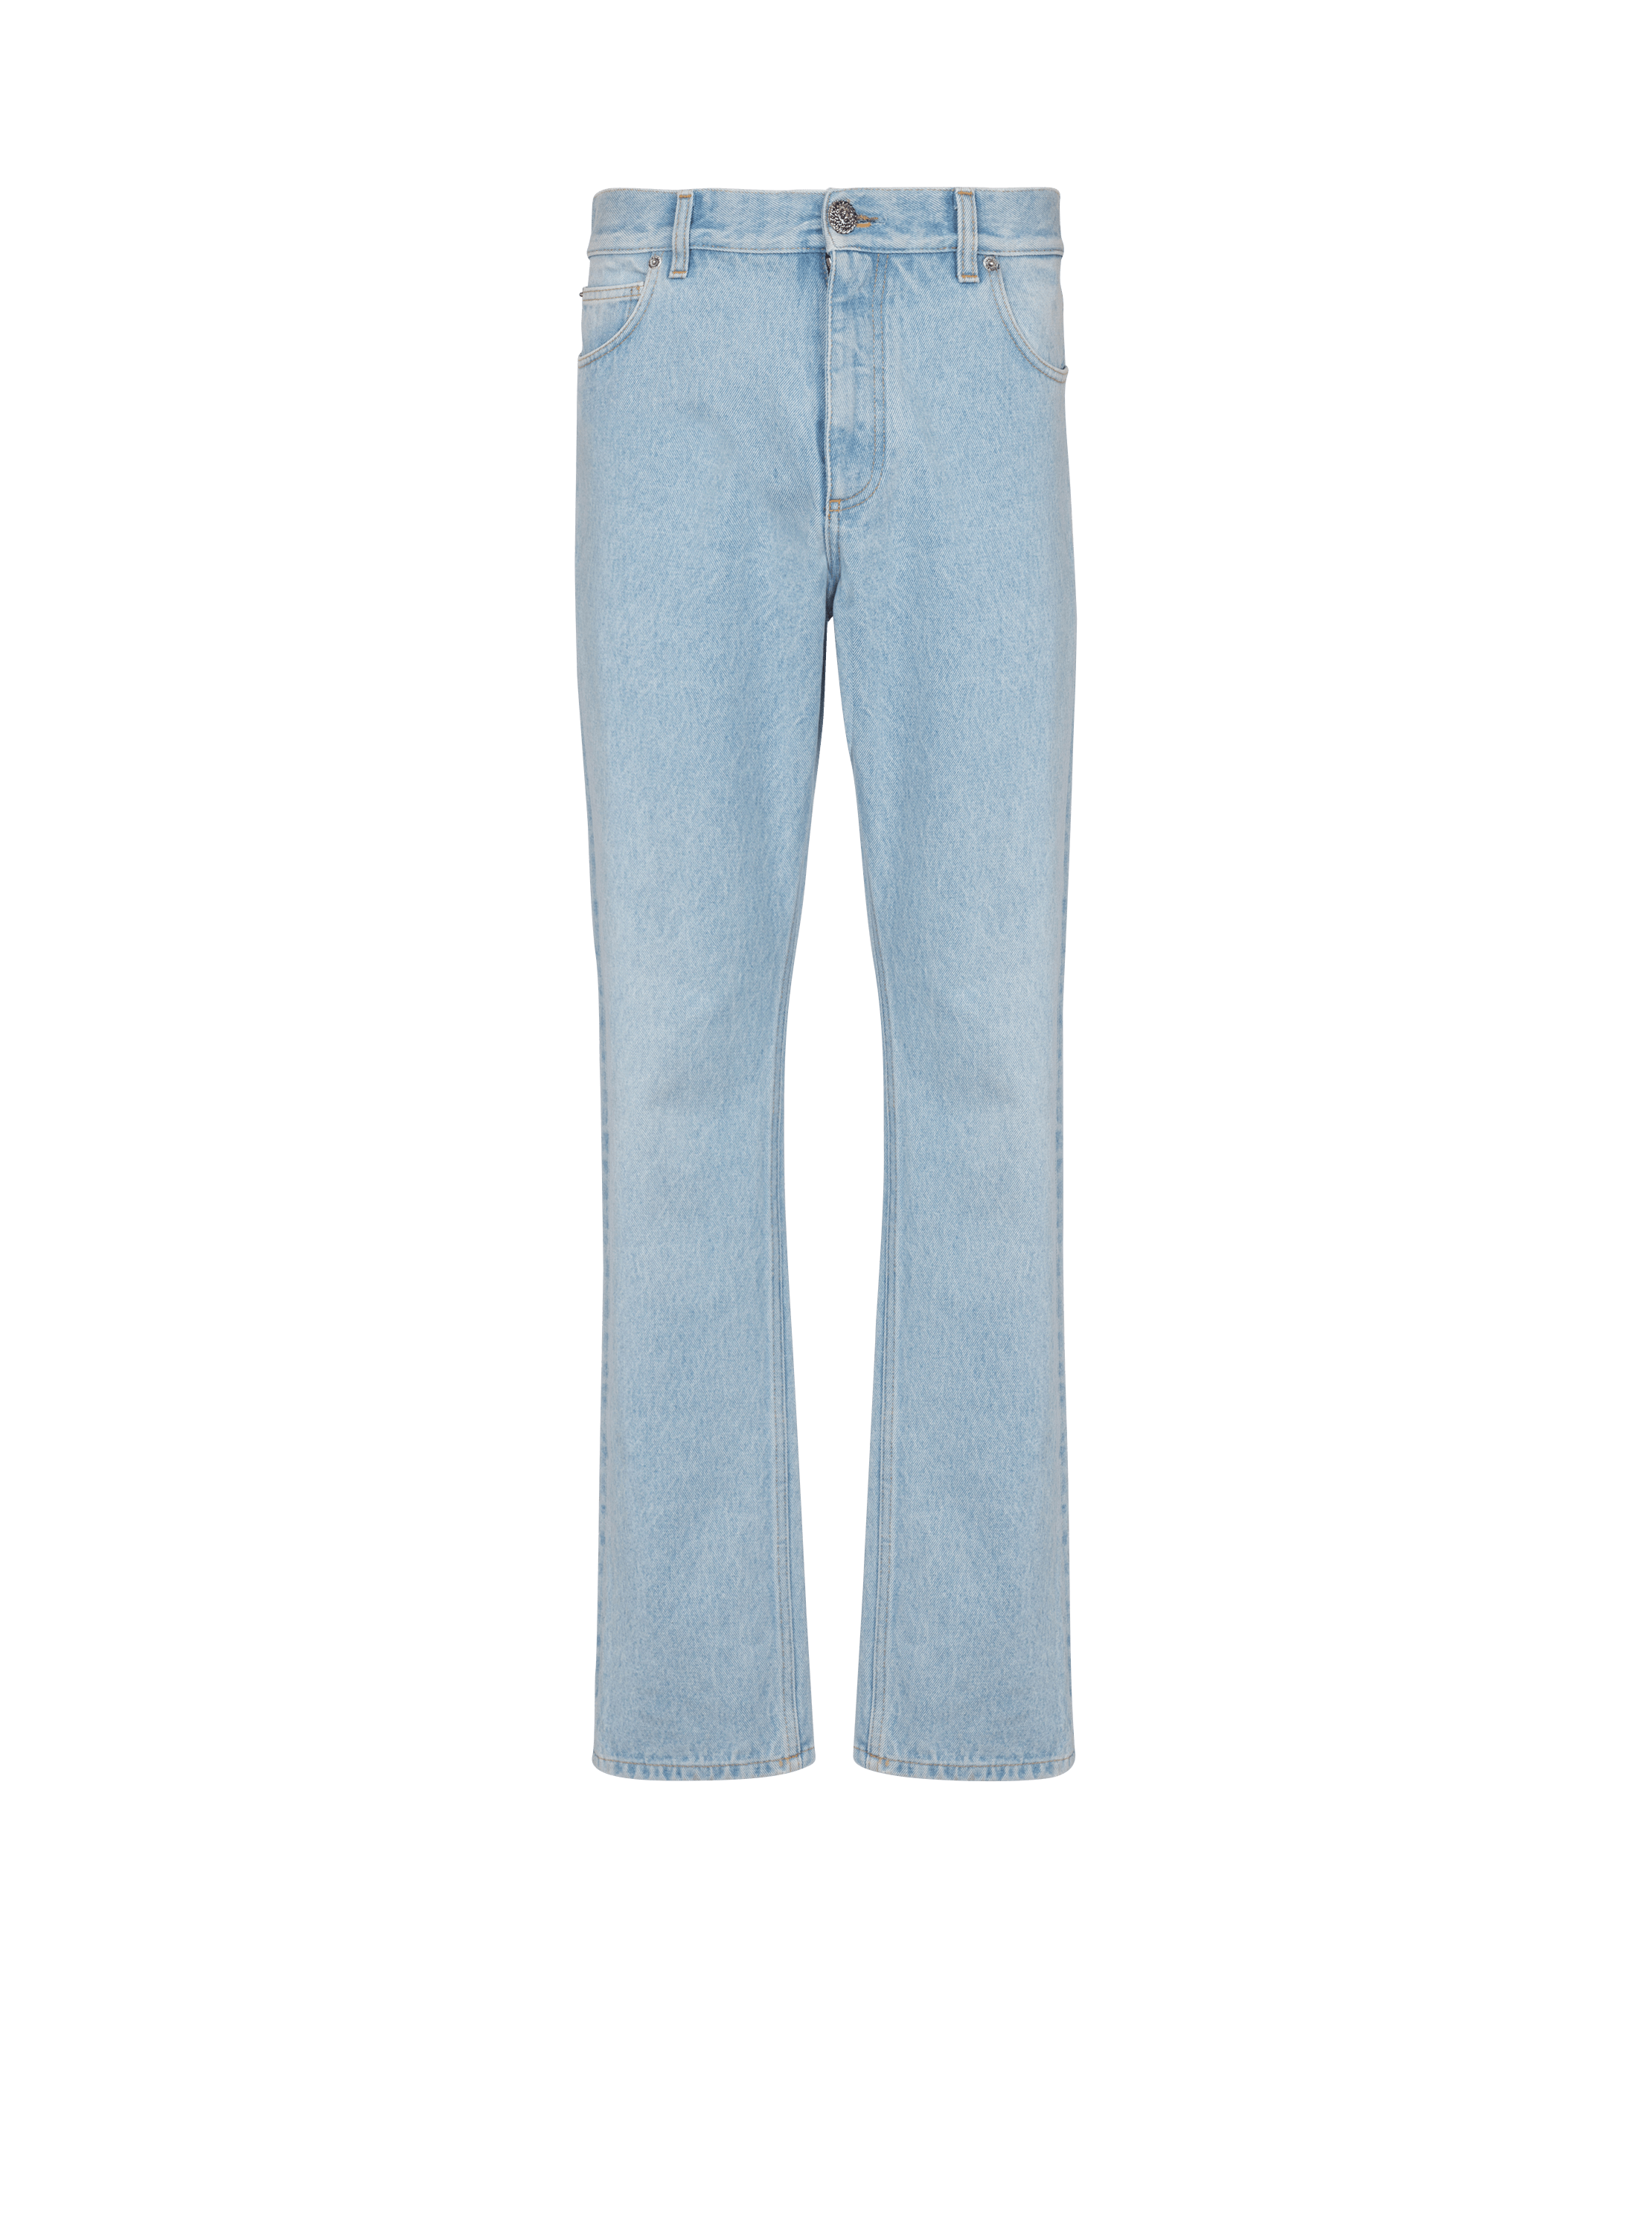 Reguläre Jeans aus hellblauem Denim 